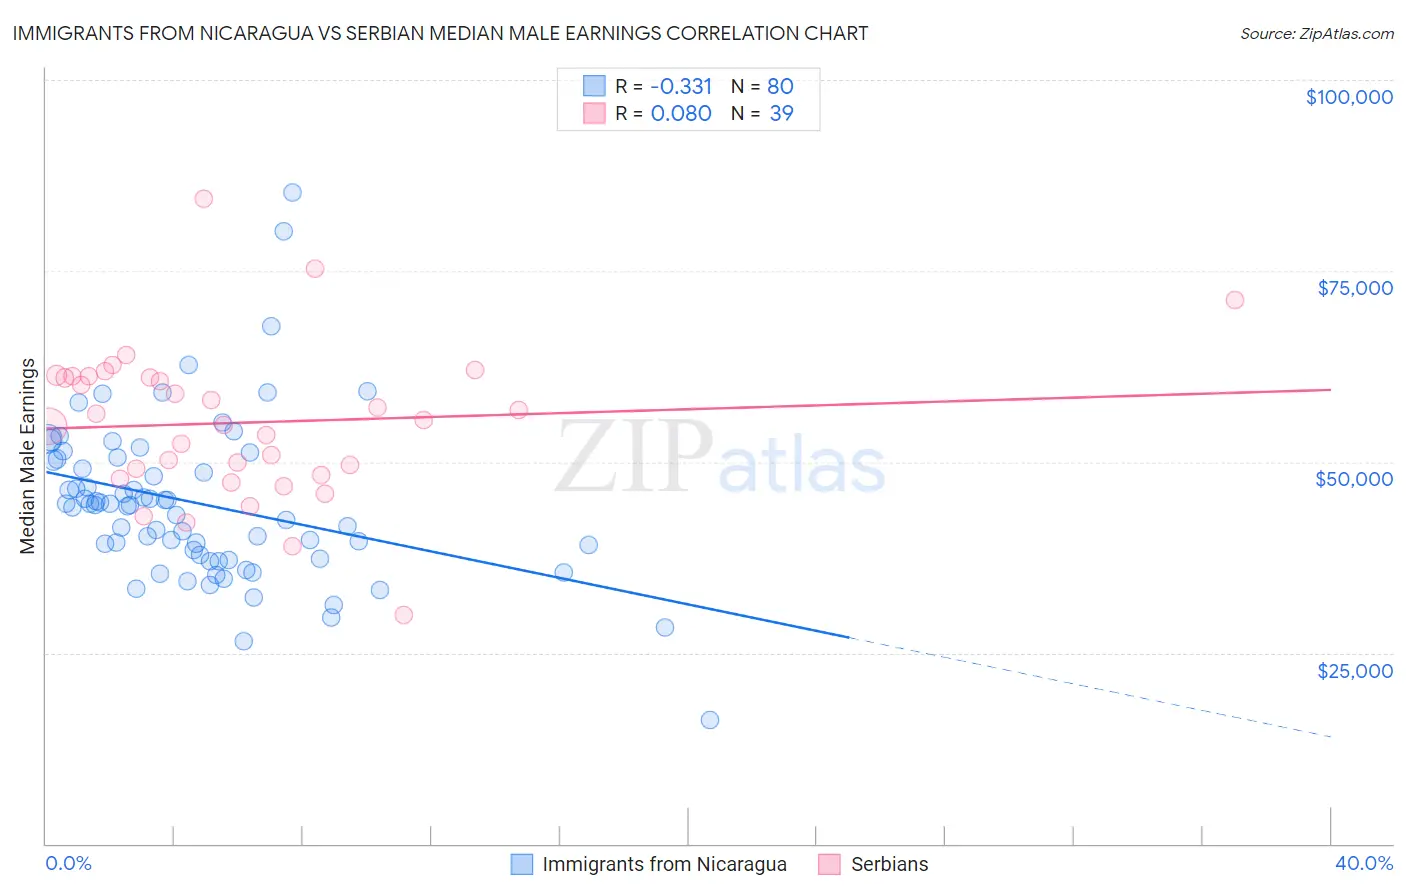 Immigrants from Nicaragua vs Serbian Median Male Earnings